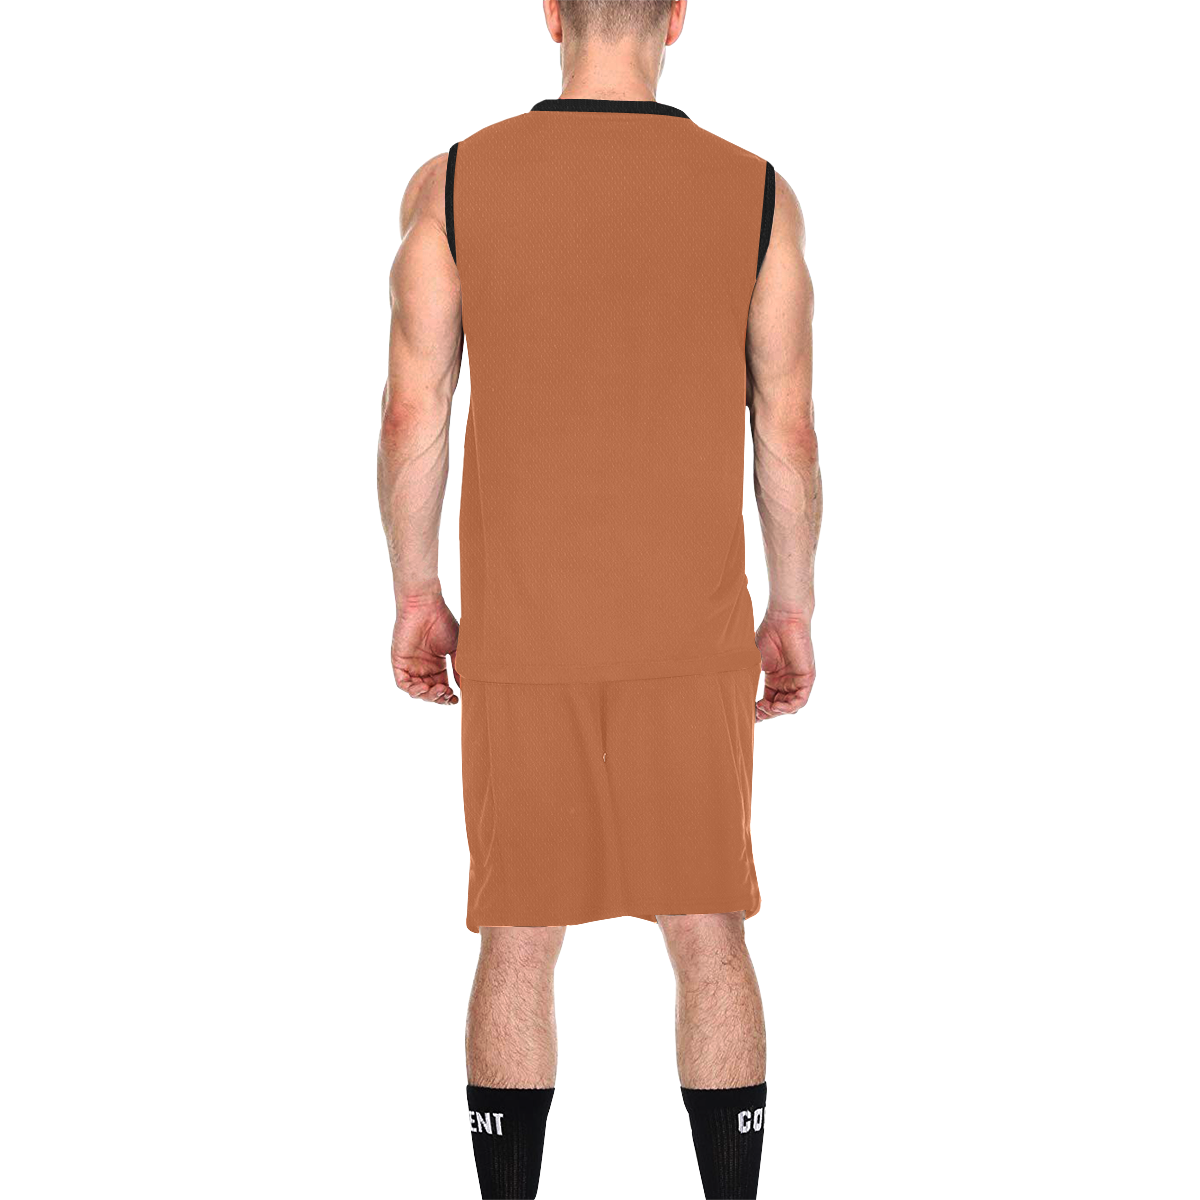 zappwaits v2 All Over Print Basketball Uniform